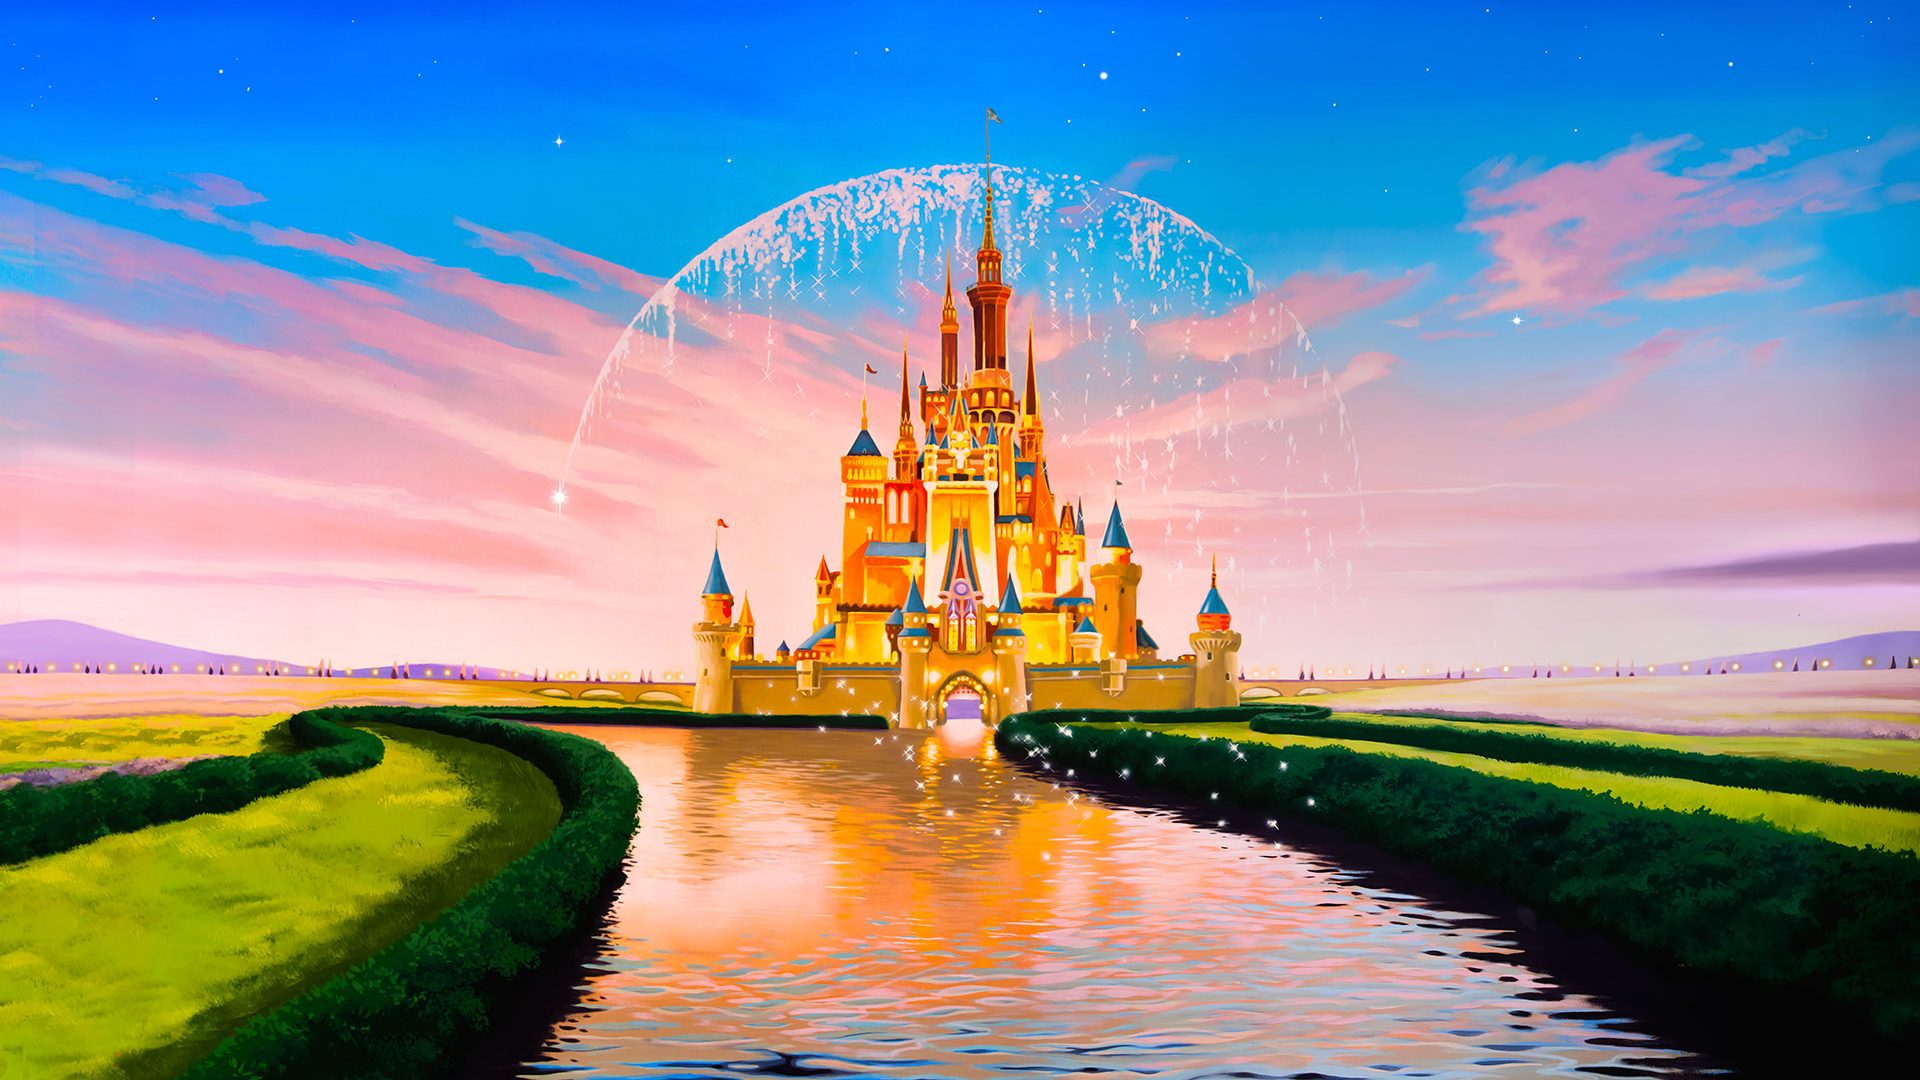 Disney Background Wallpaper Free Download